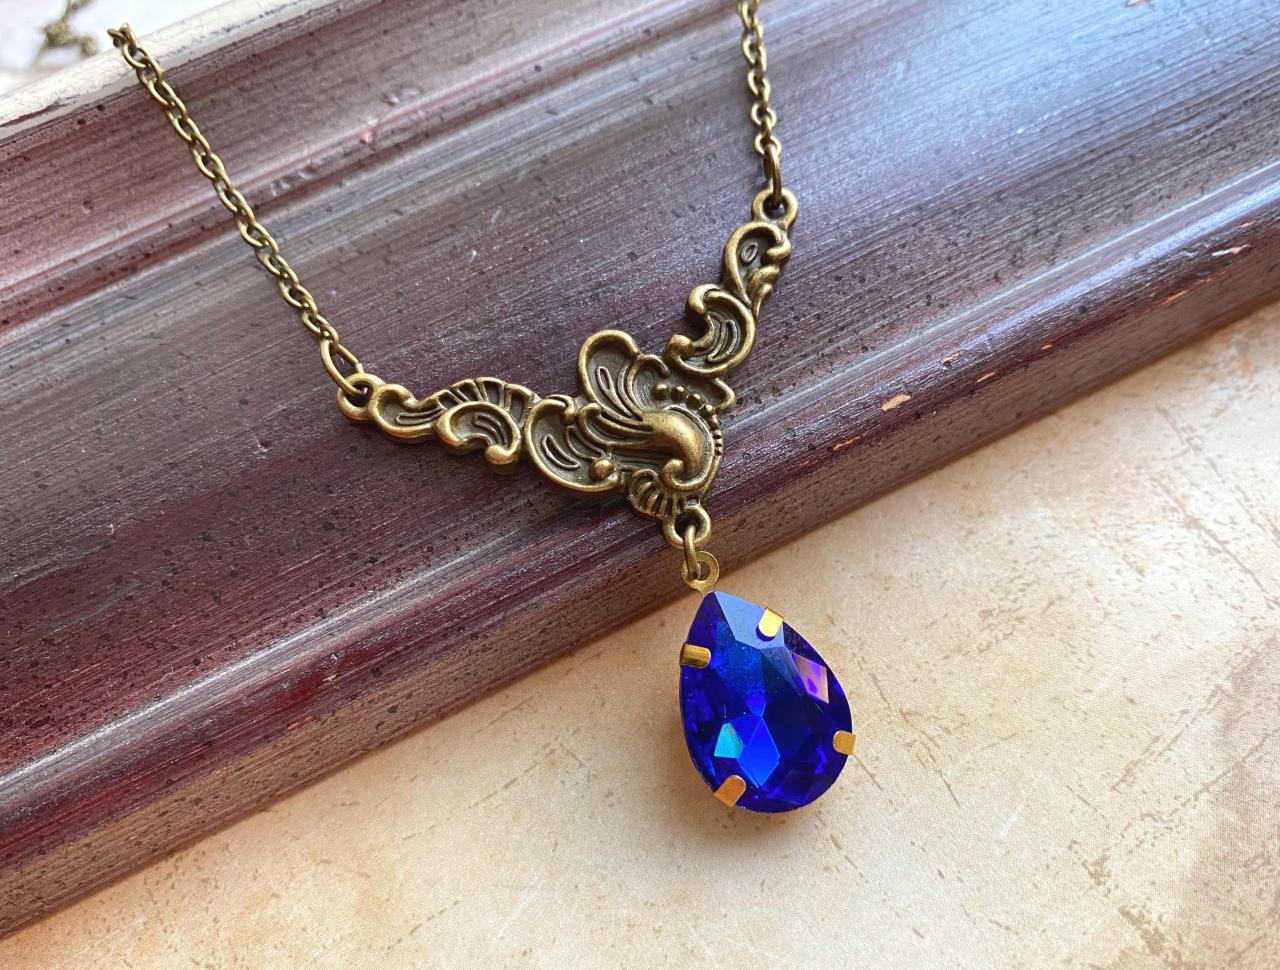 Stunning Art Nouveau Necklace With A Blue Glass Pendant, Selma Dreams